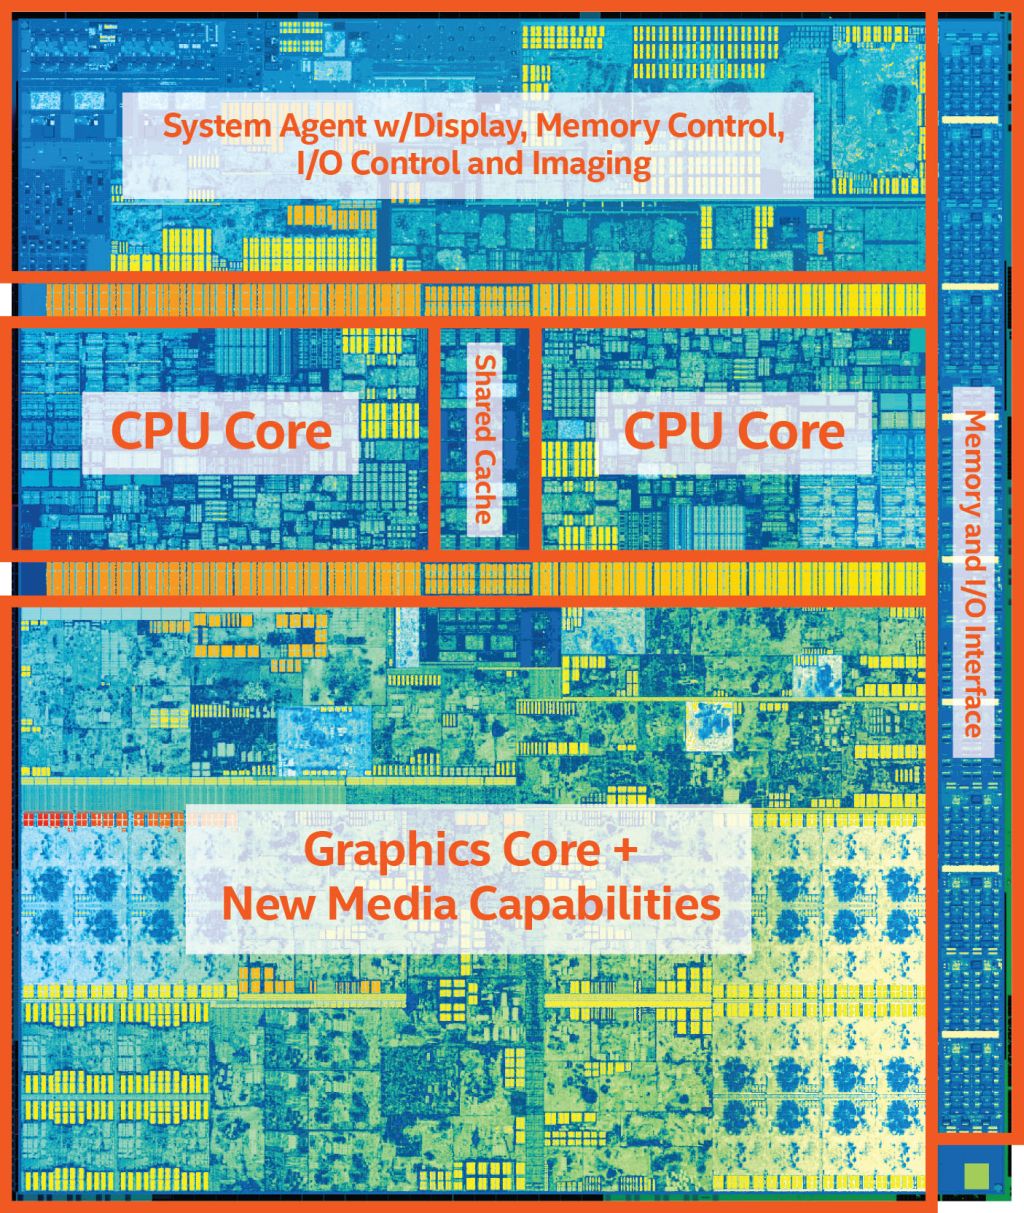 7th Gen Intel Core die with label